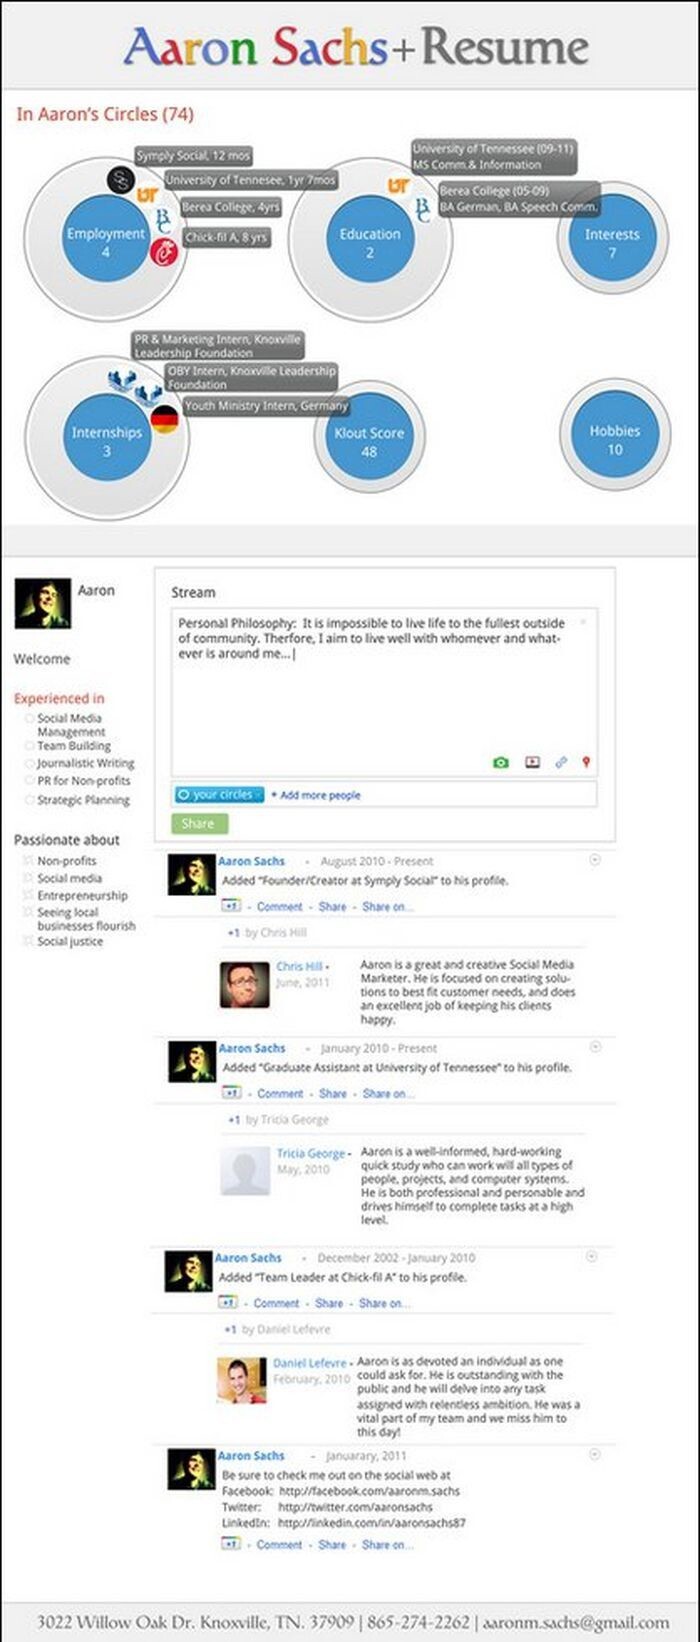 8. Аарон Сакс создал резюме, на которое его вдохновил Google+.